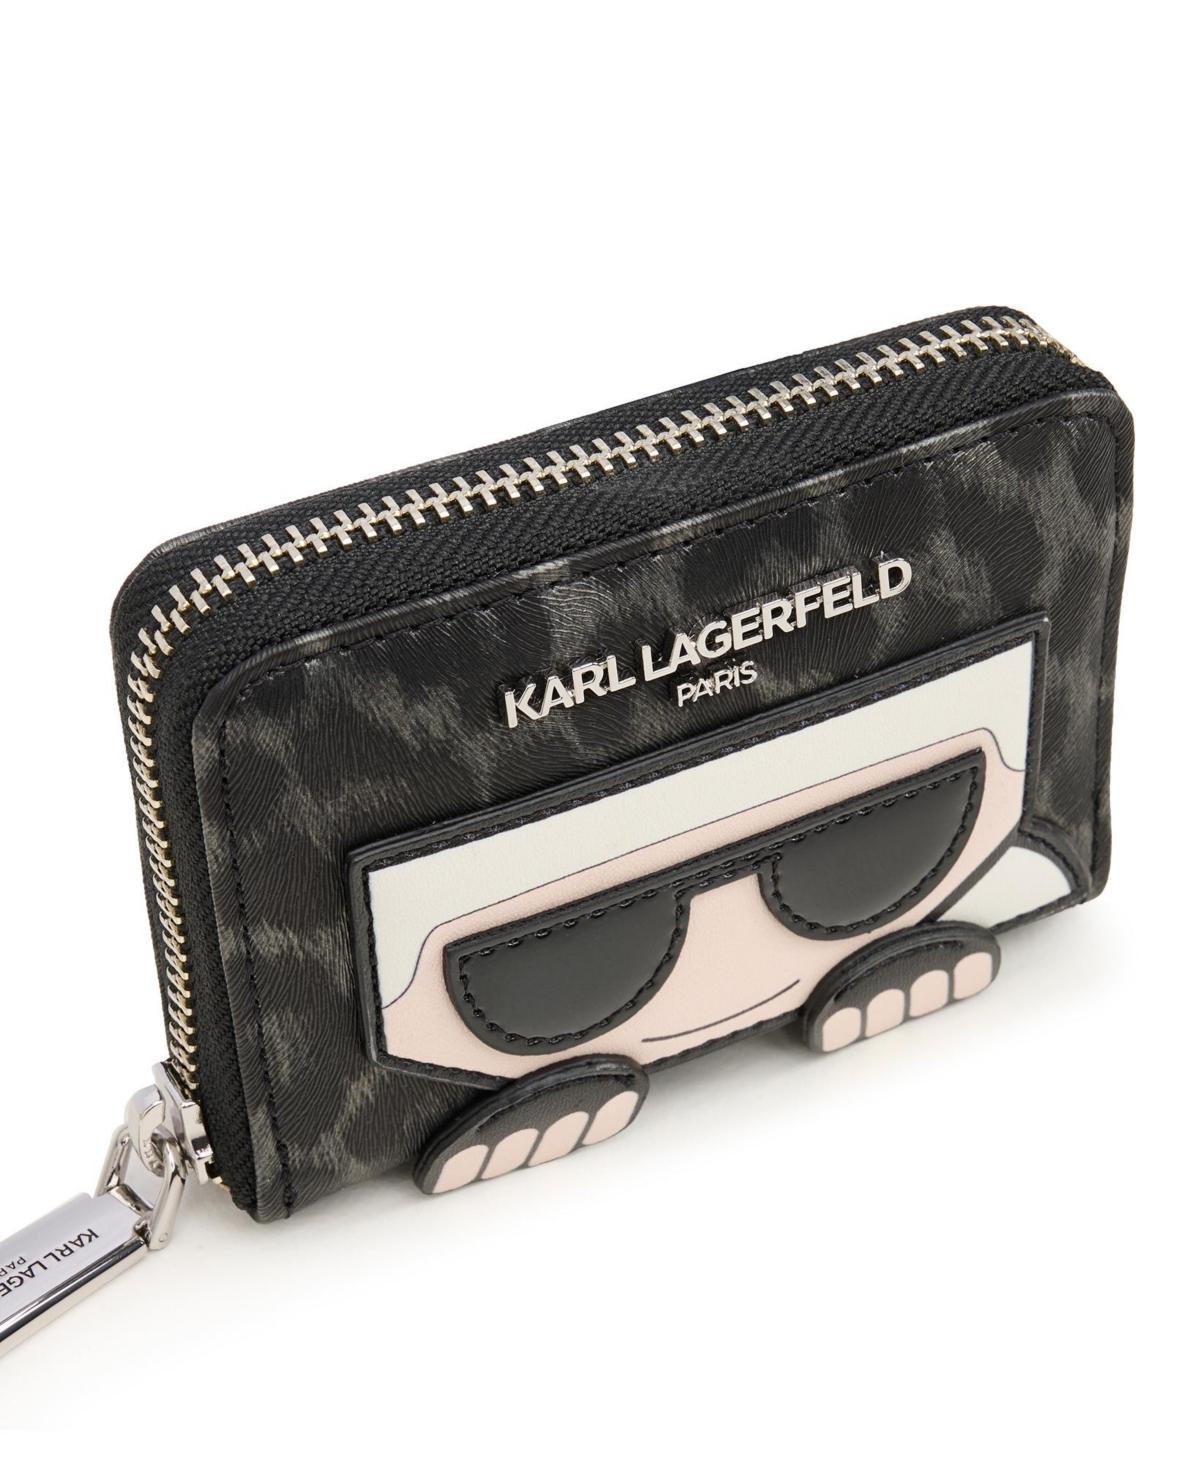 Karl Lagerfeld Paris Maybelle Slg Wallet